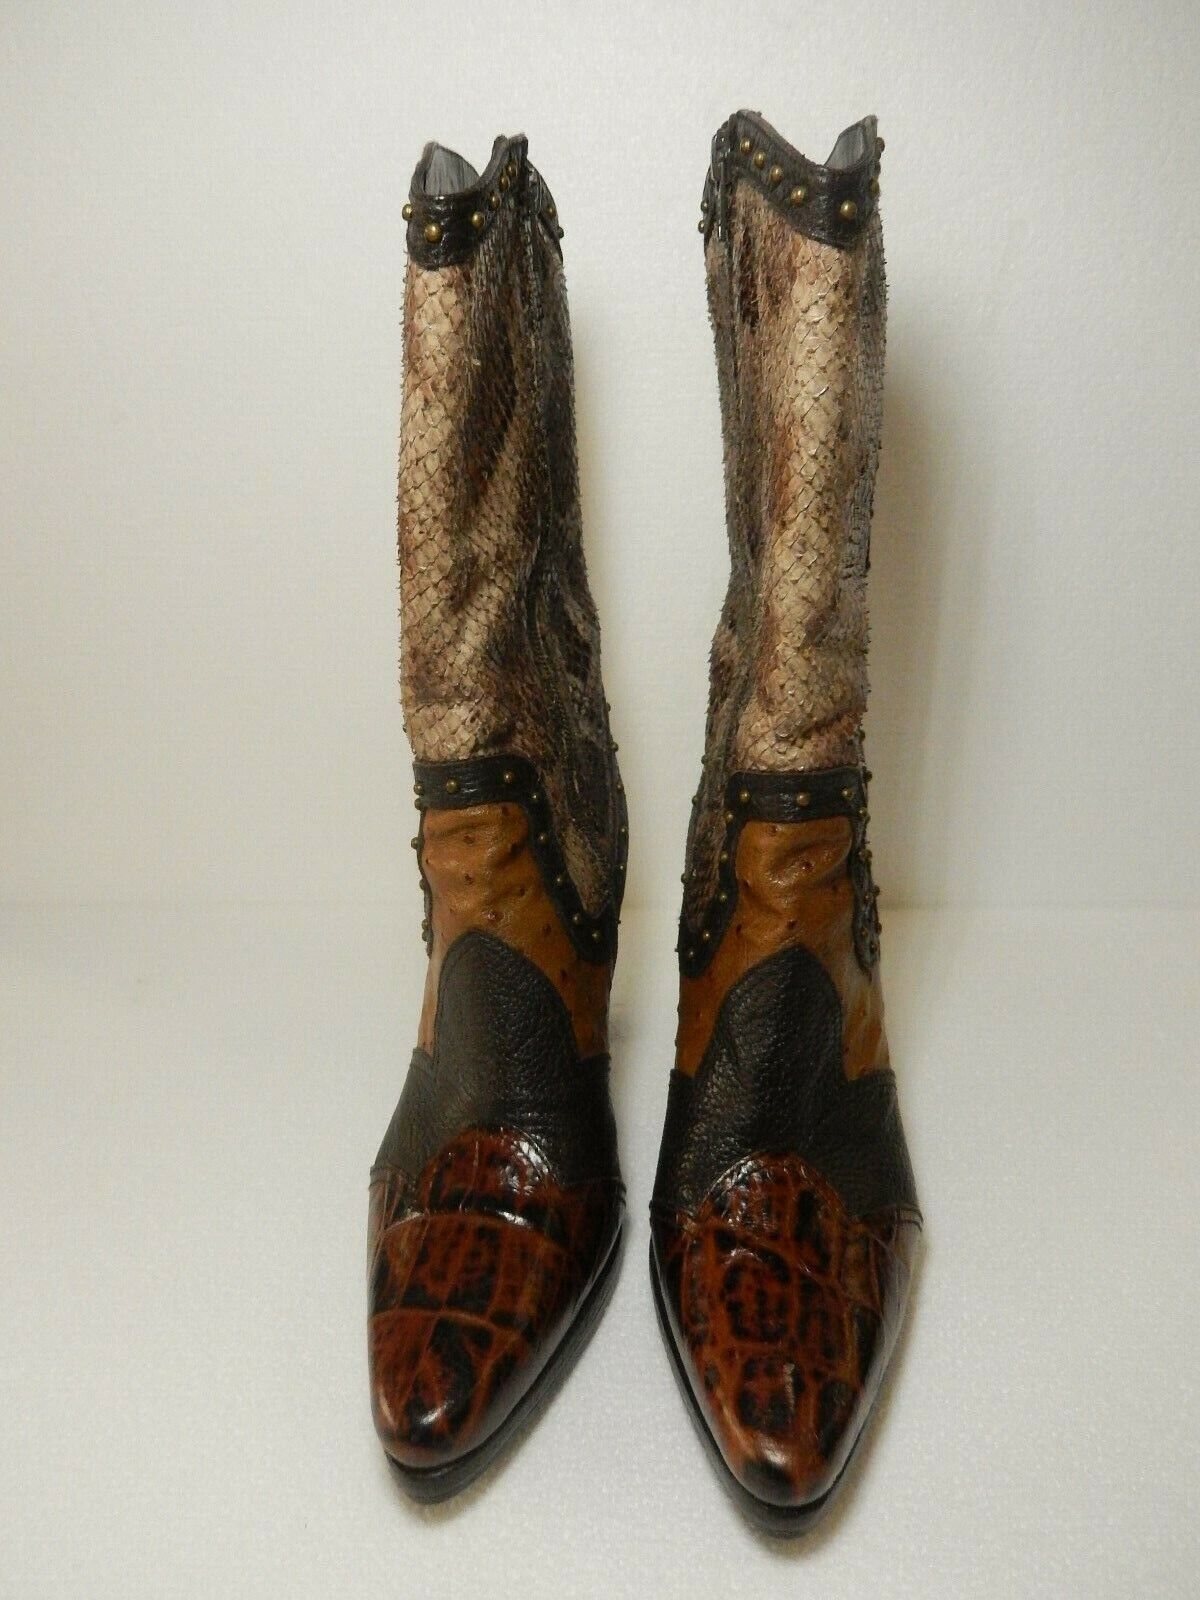 *MINT* Stuart Weitzman Stampede Brown Croco Leather boots Sz 8.5B w/box $475